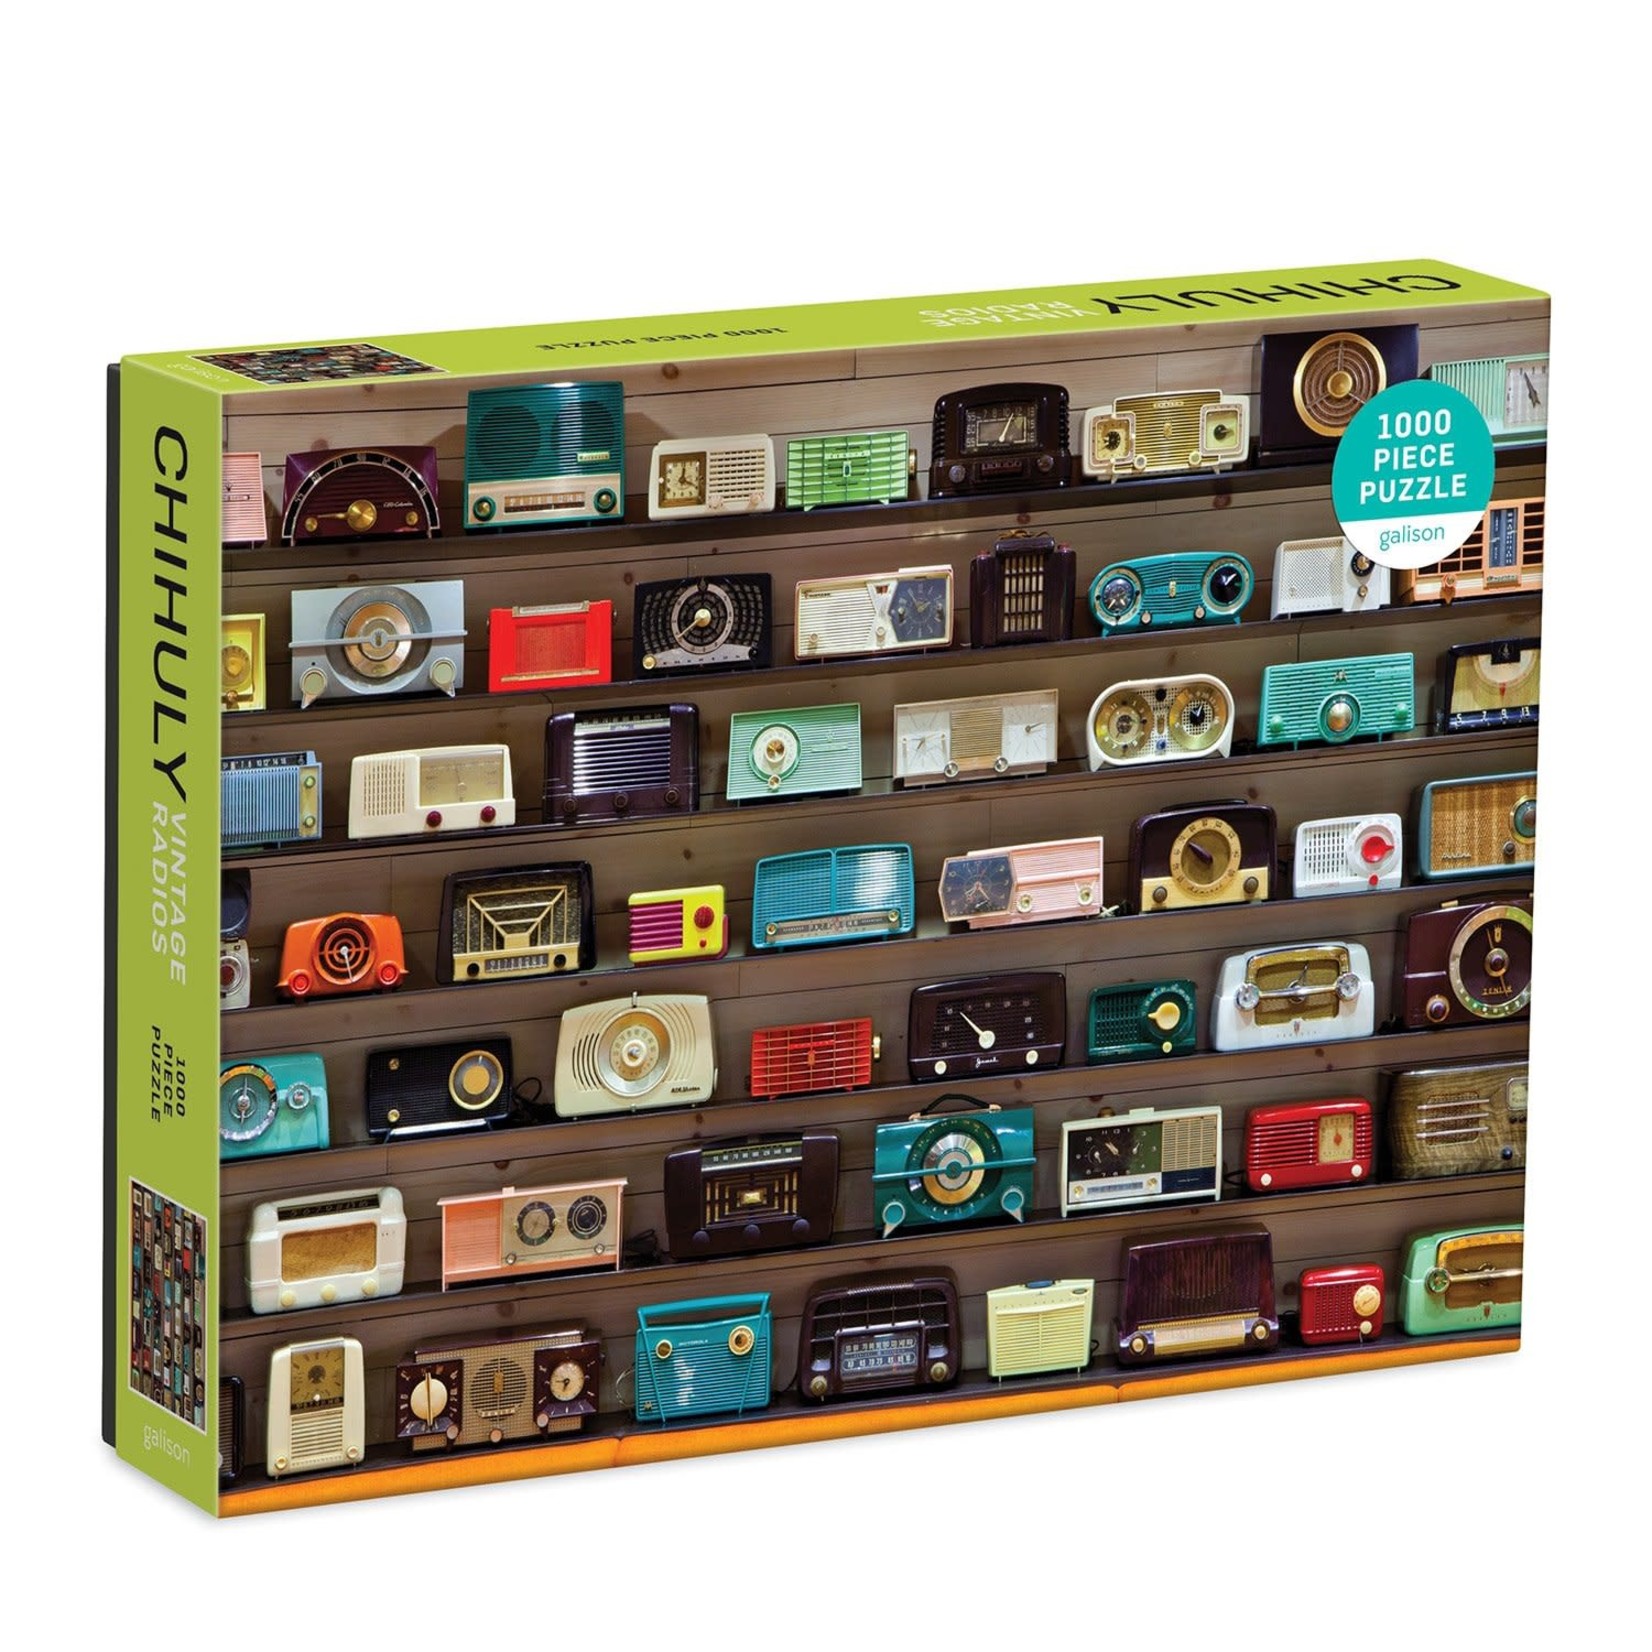 galison Vintage Radios 1000 Piece Jigsaw Puzzle